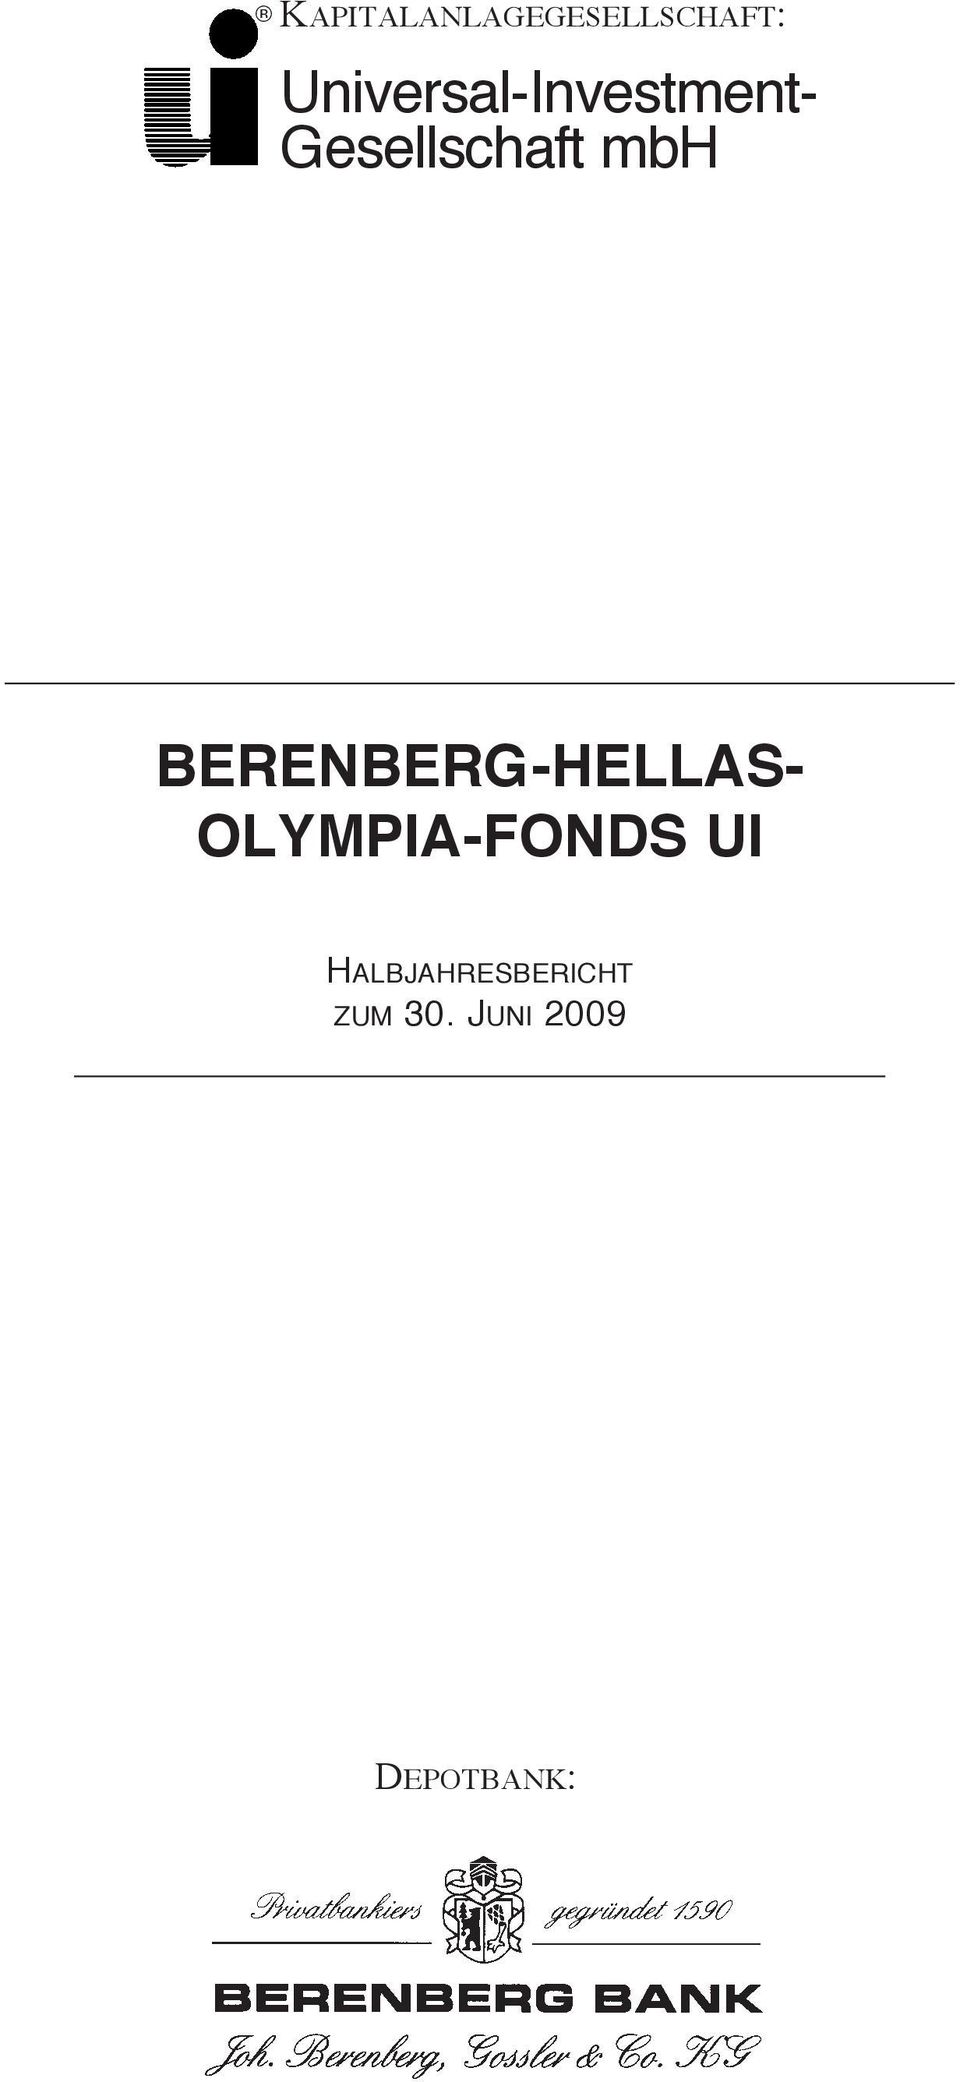 BERENBERG-HELLAS- OLYMPIA-FONDS UI